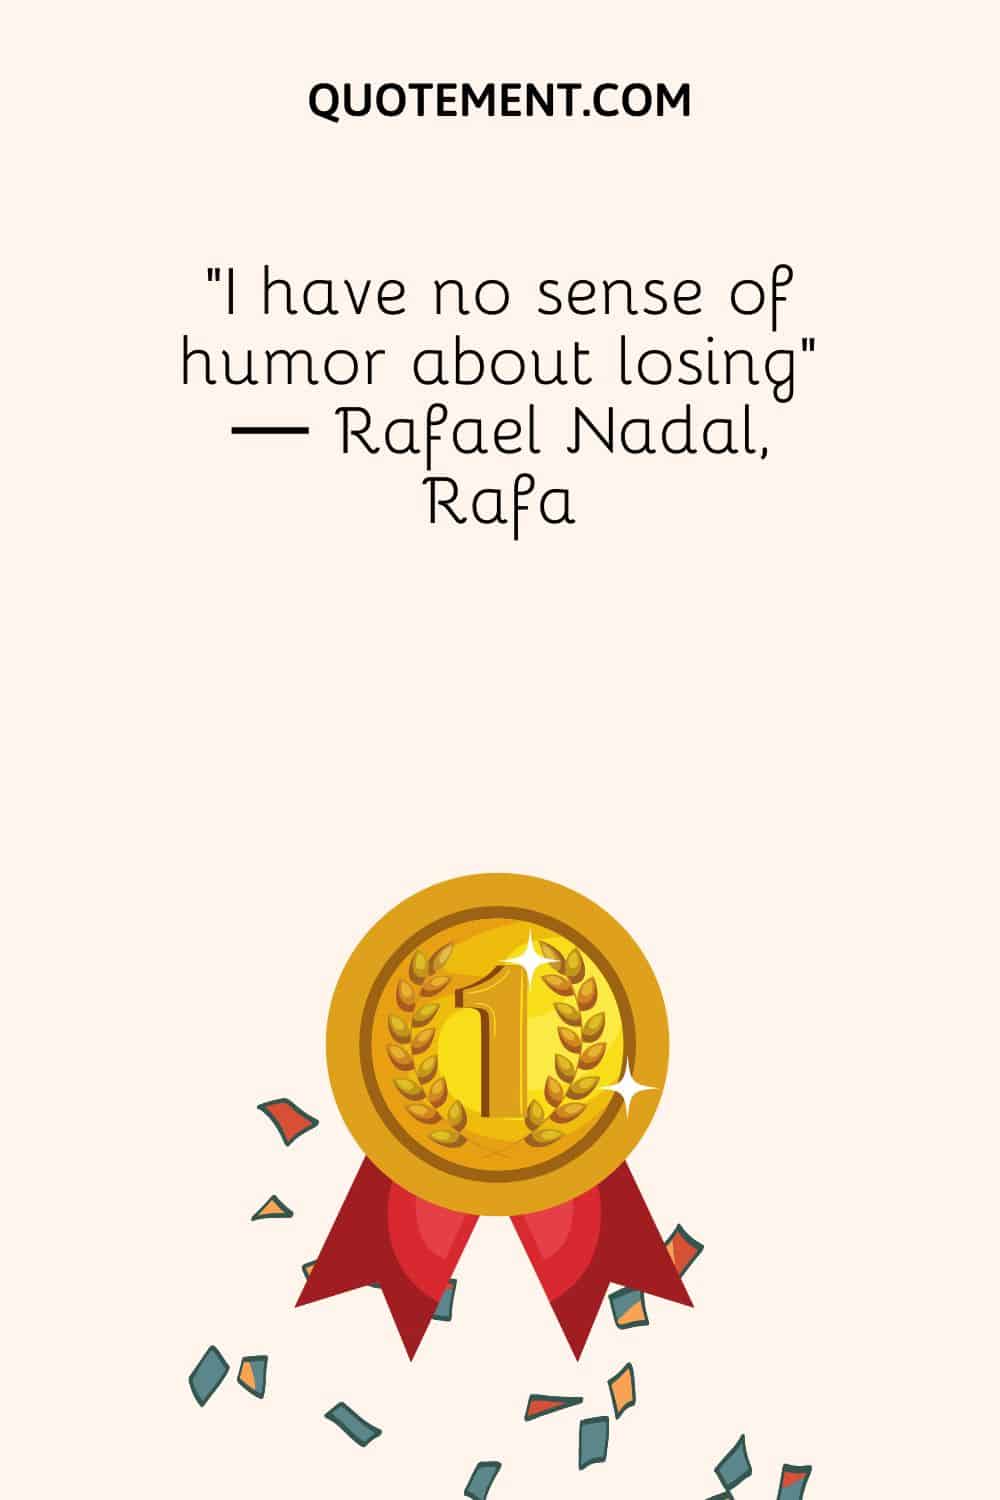 “I have no sense of humor about losing” ― Rafael Nadal, Rafa